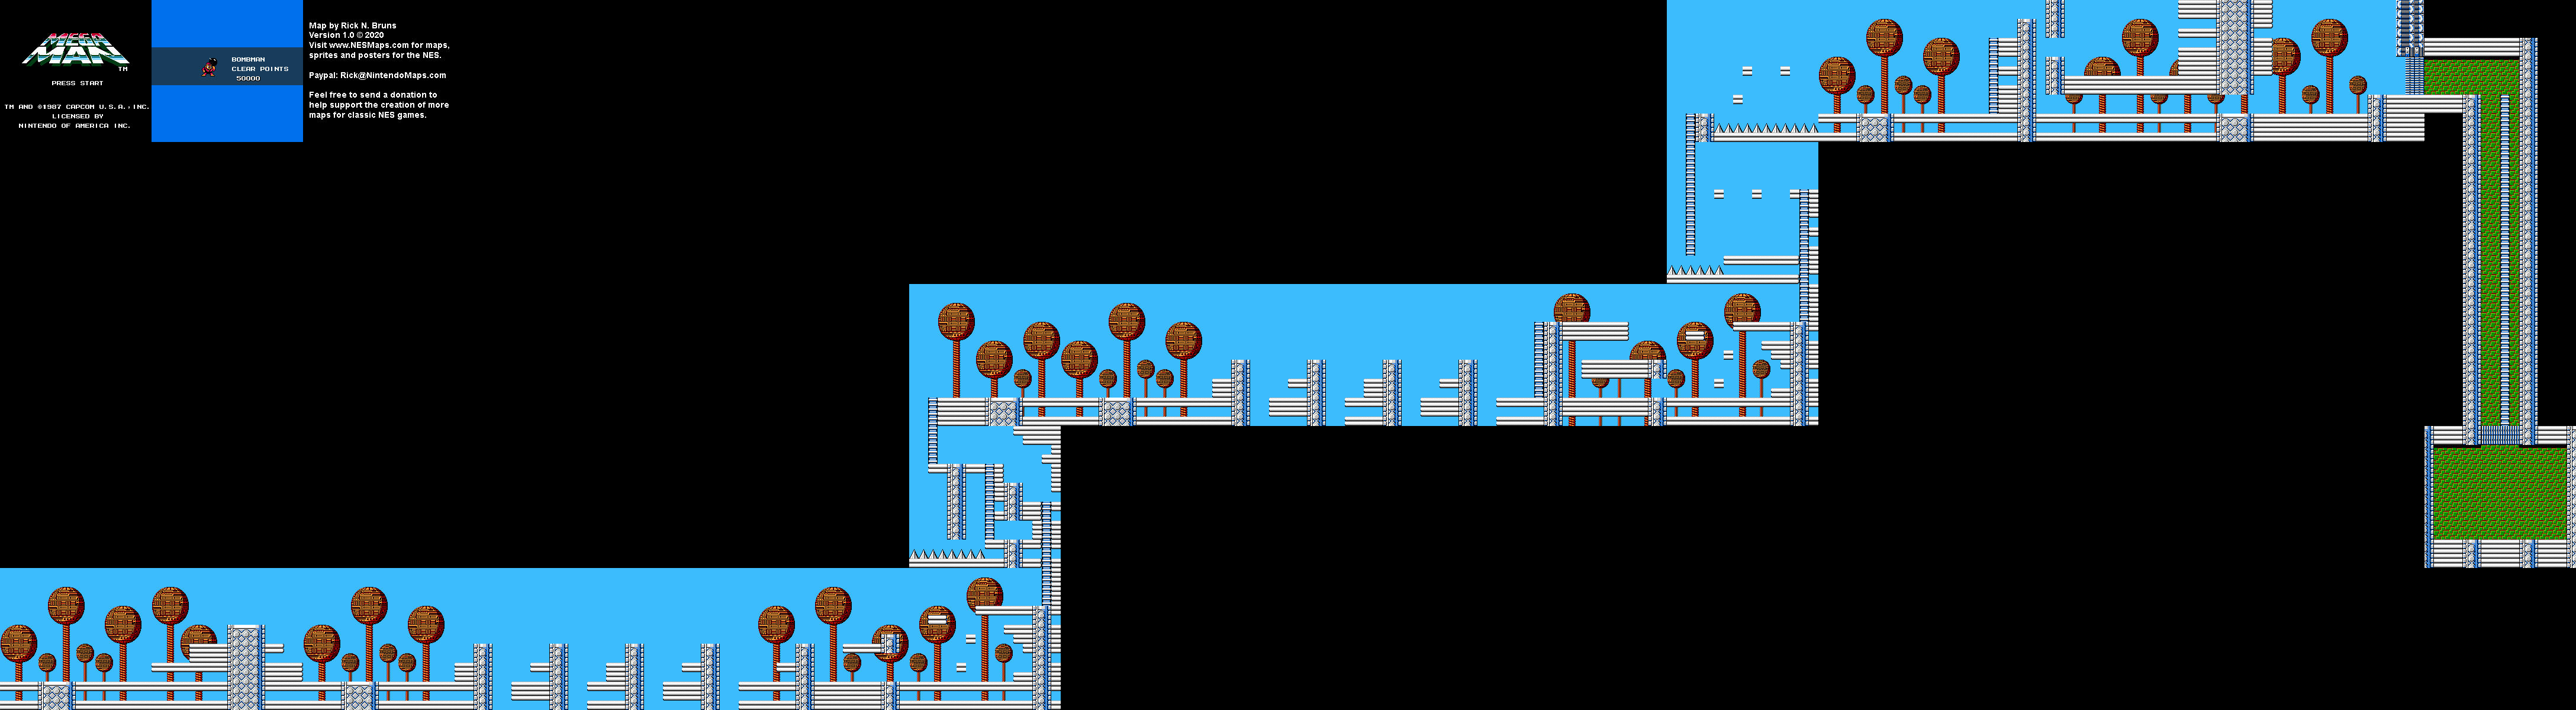 Mega Man - Bomb Man Stage Nintendo NES Map BG